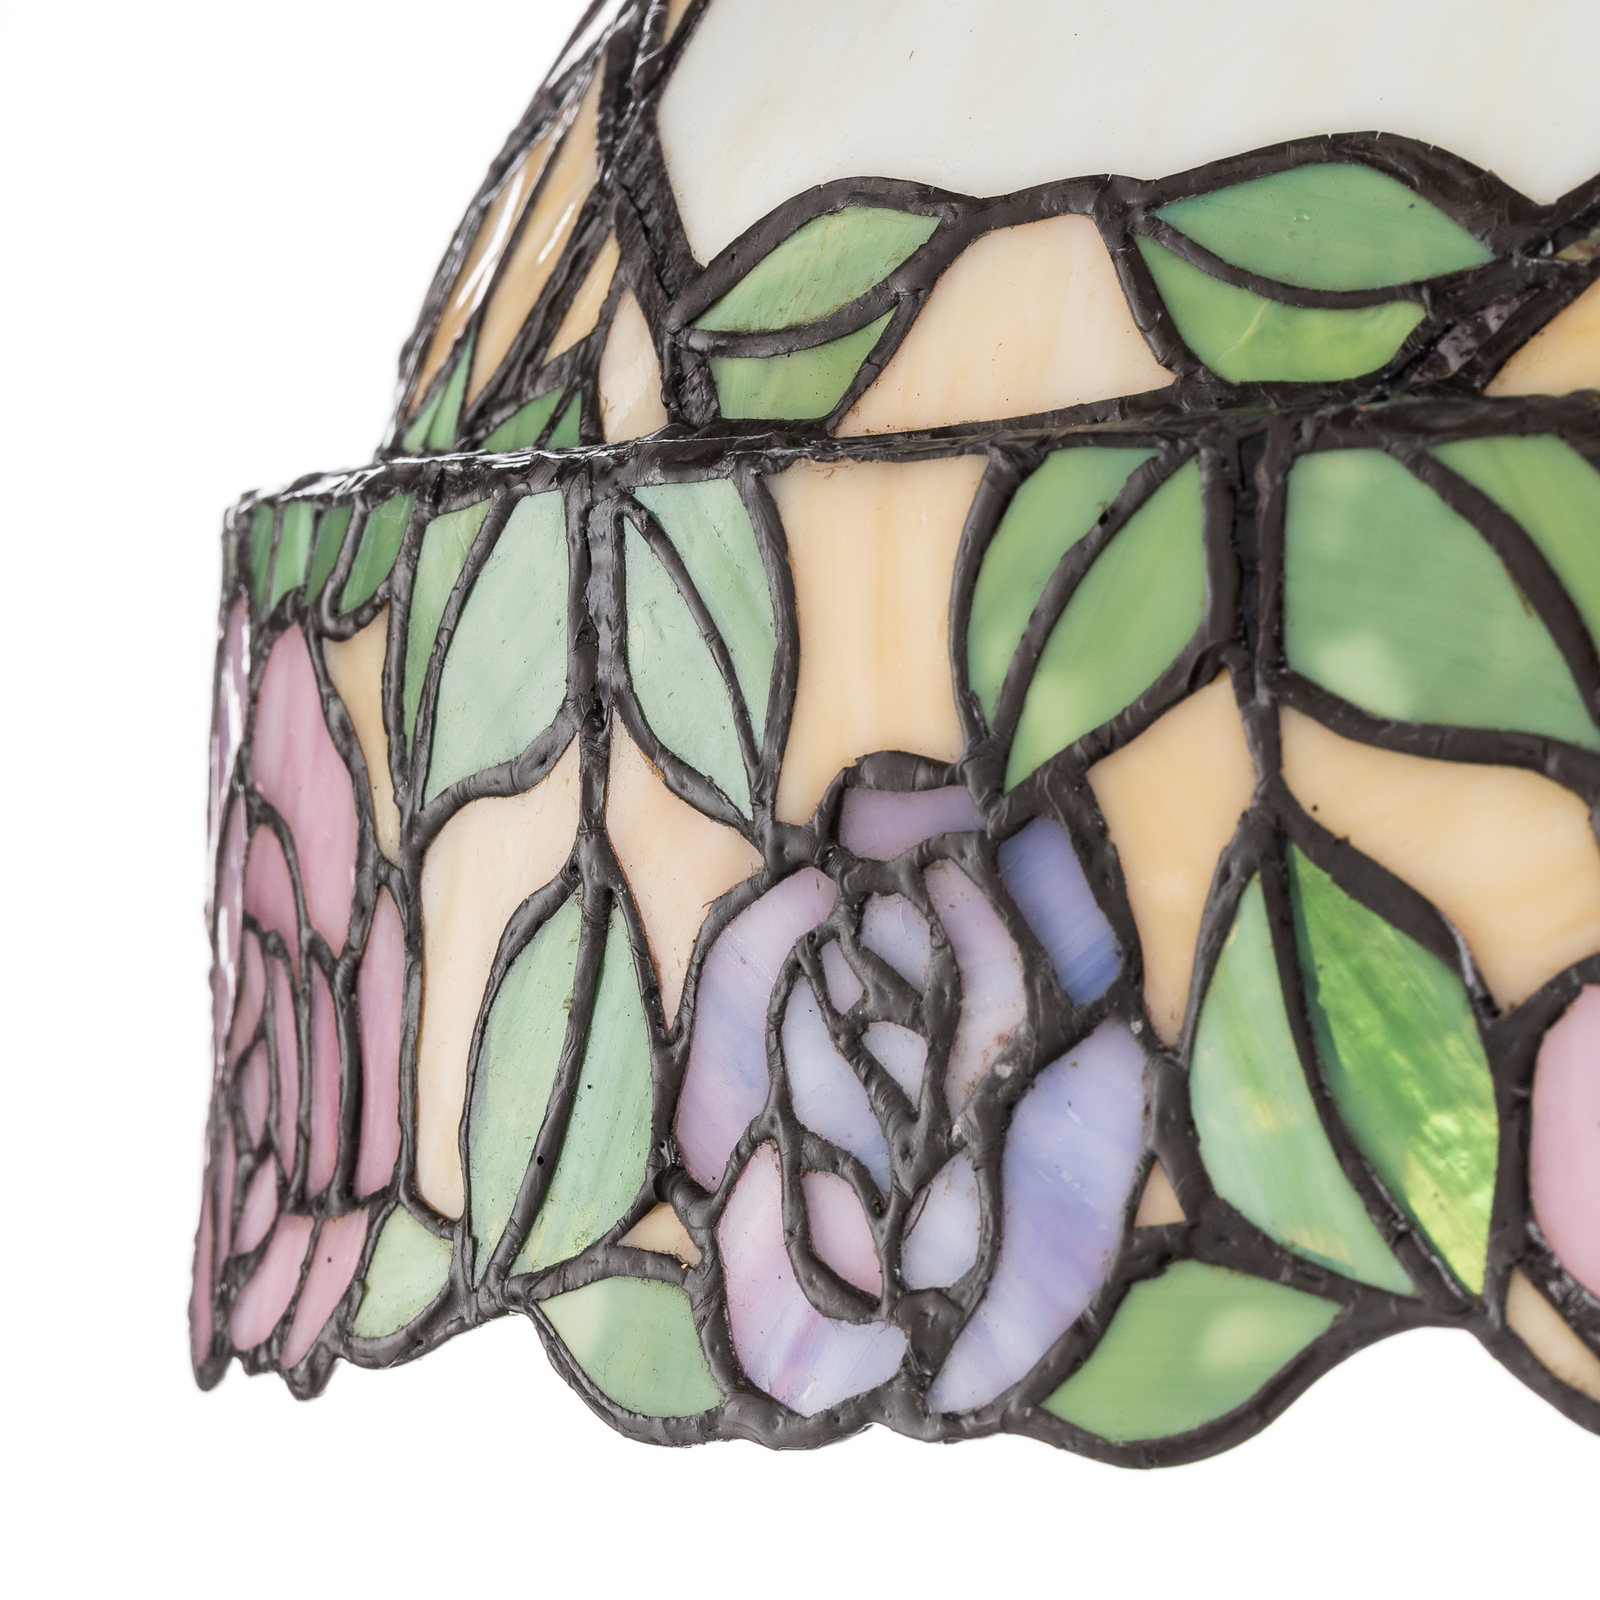 Sprookjesachtige vloerlamp Emily in Tiffany-stijl